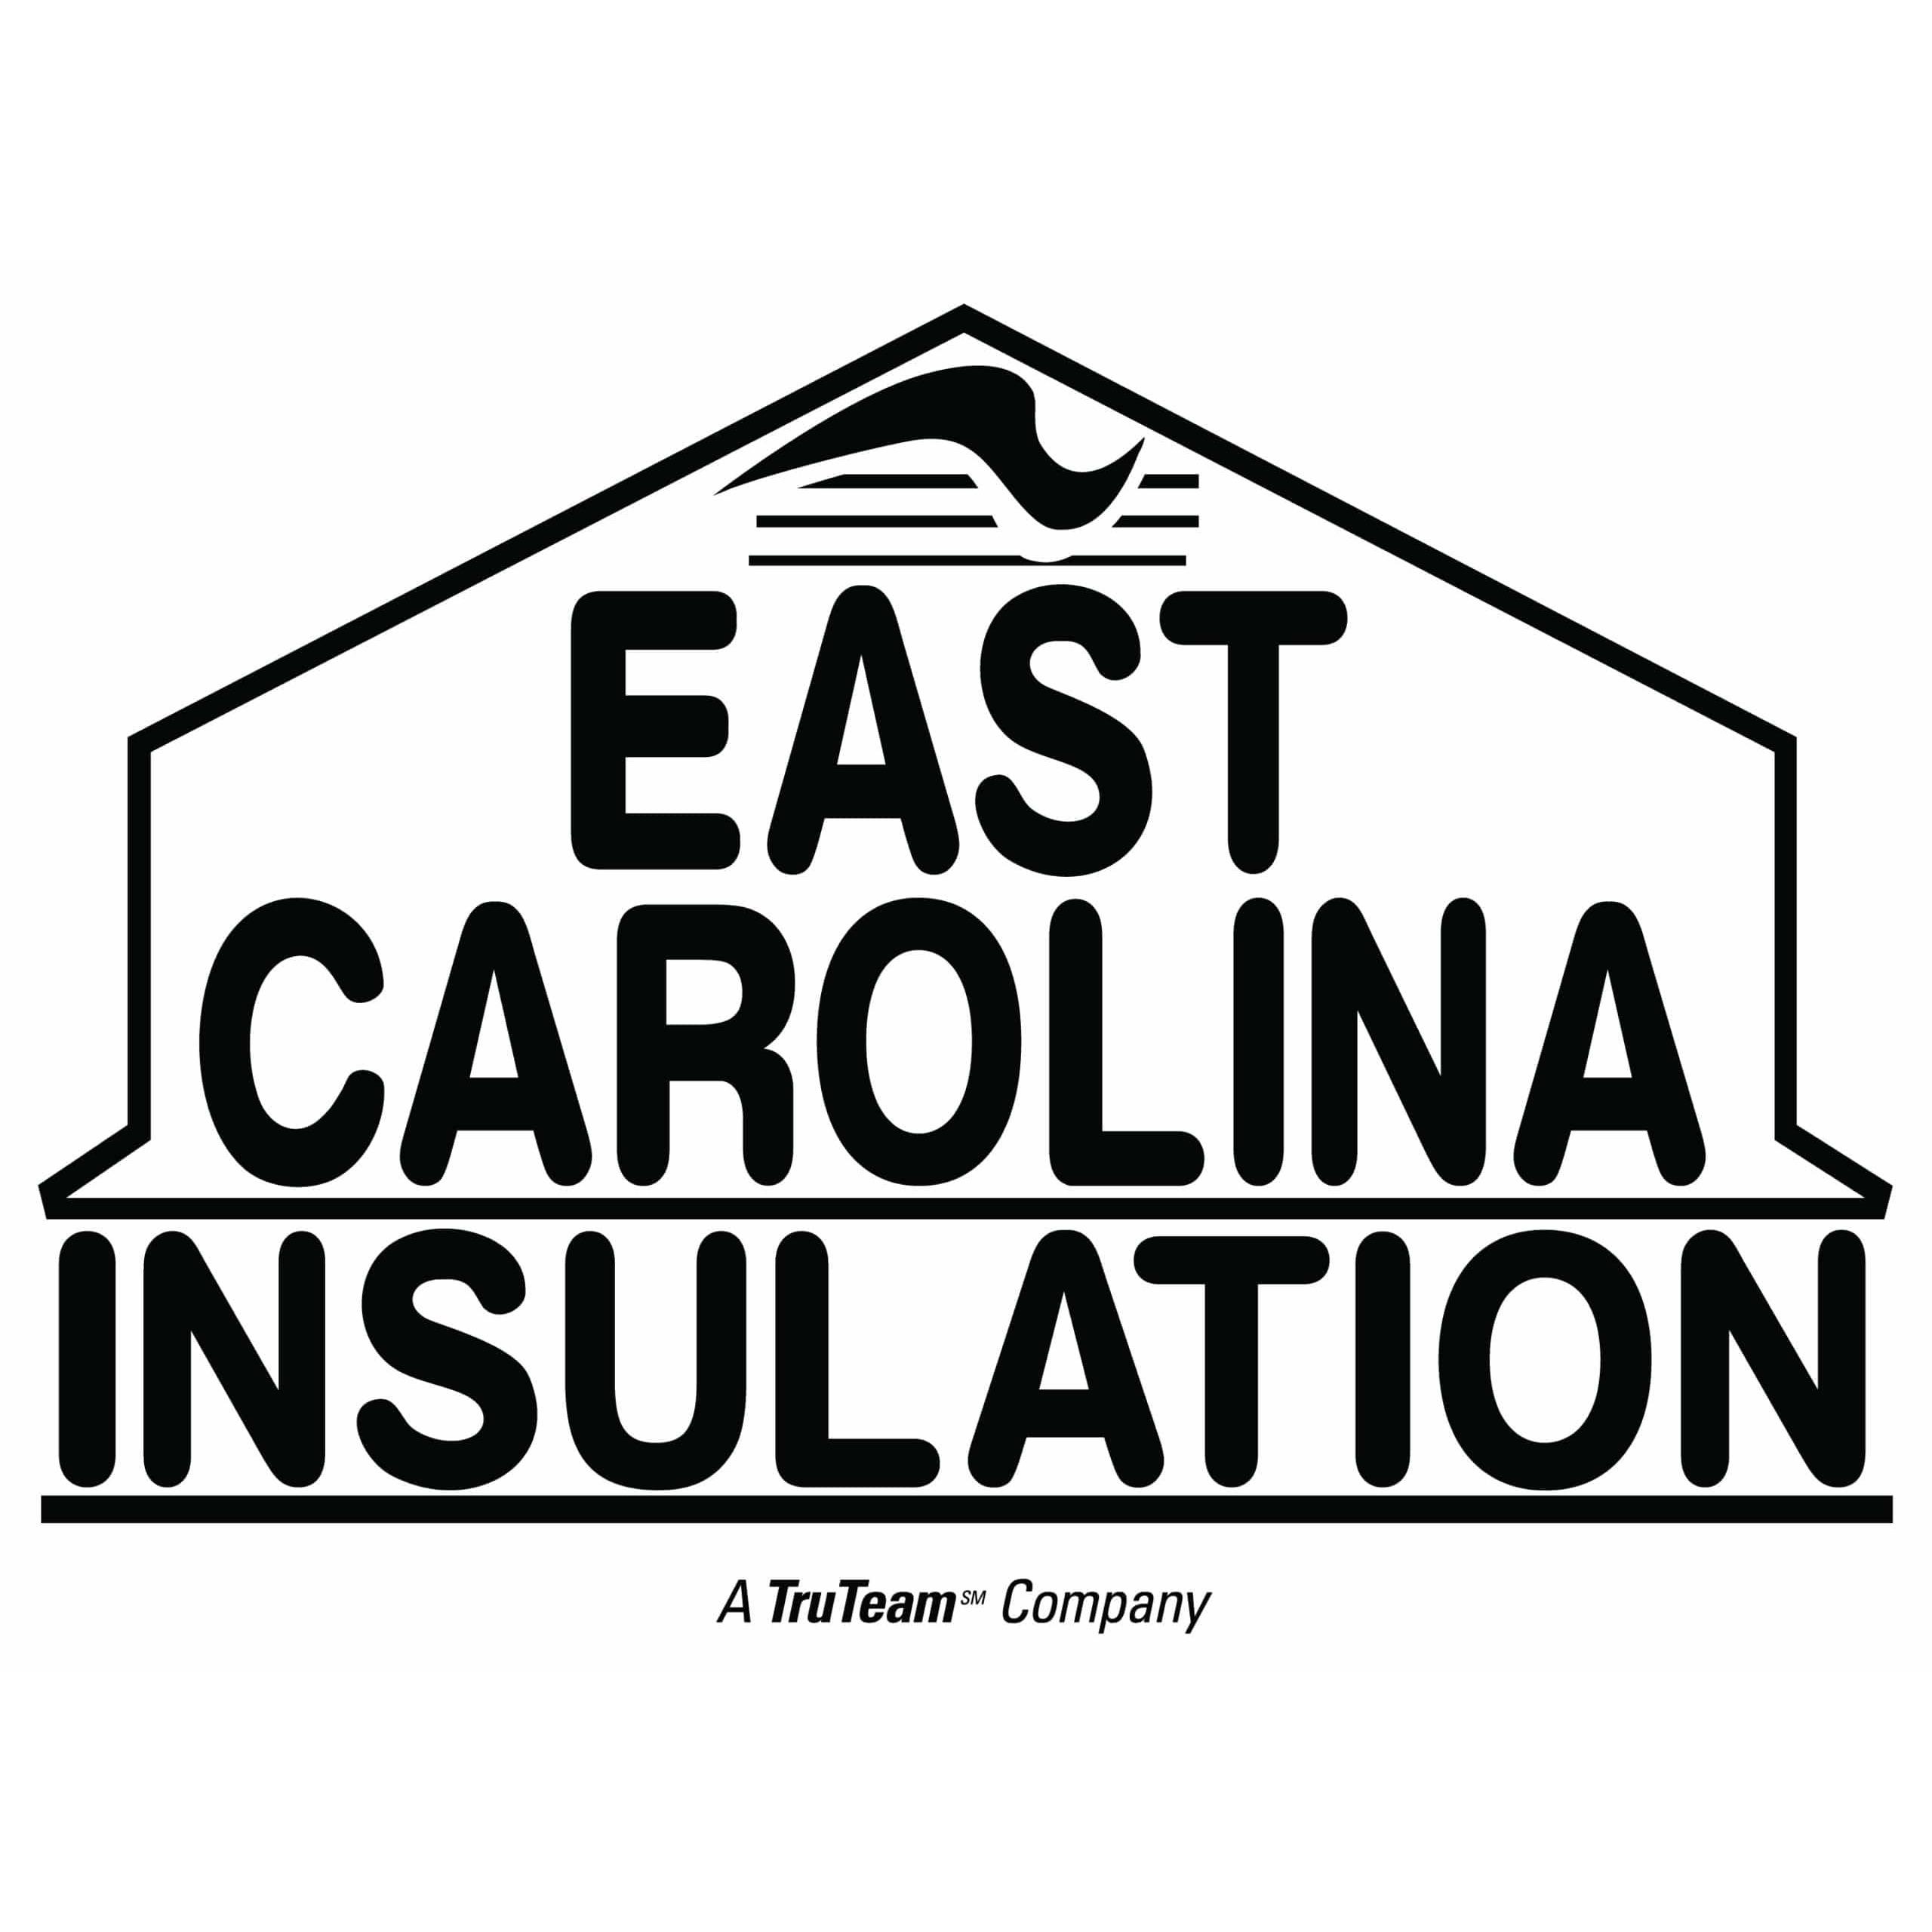 East Carolina Insulation